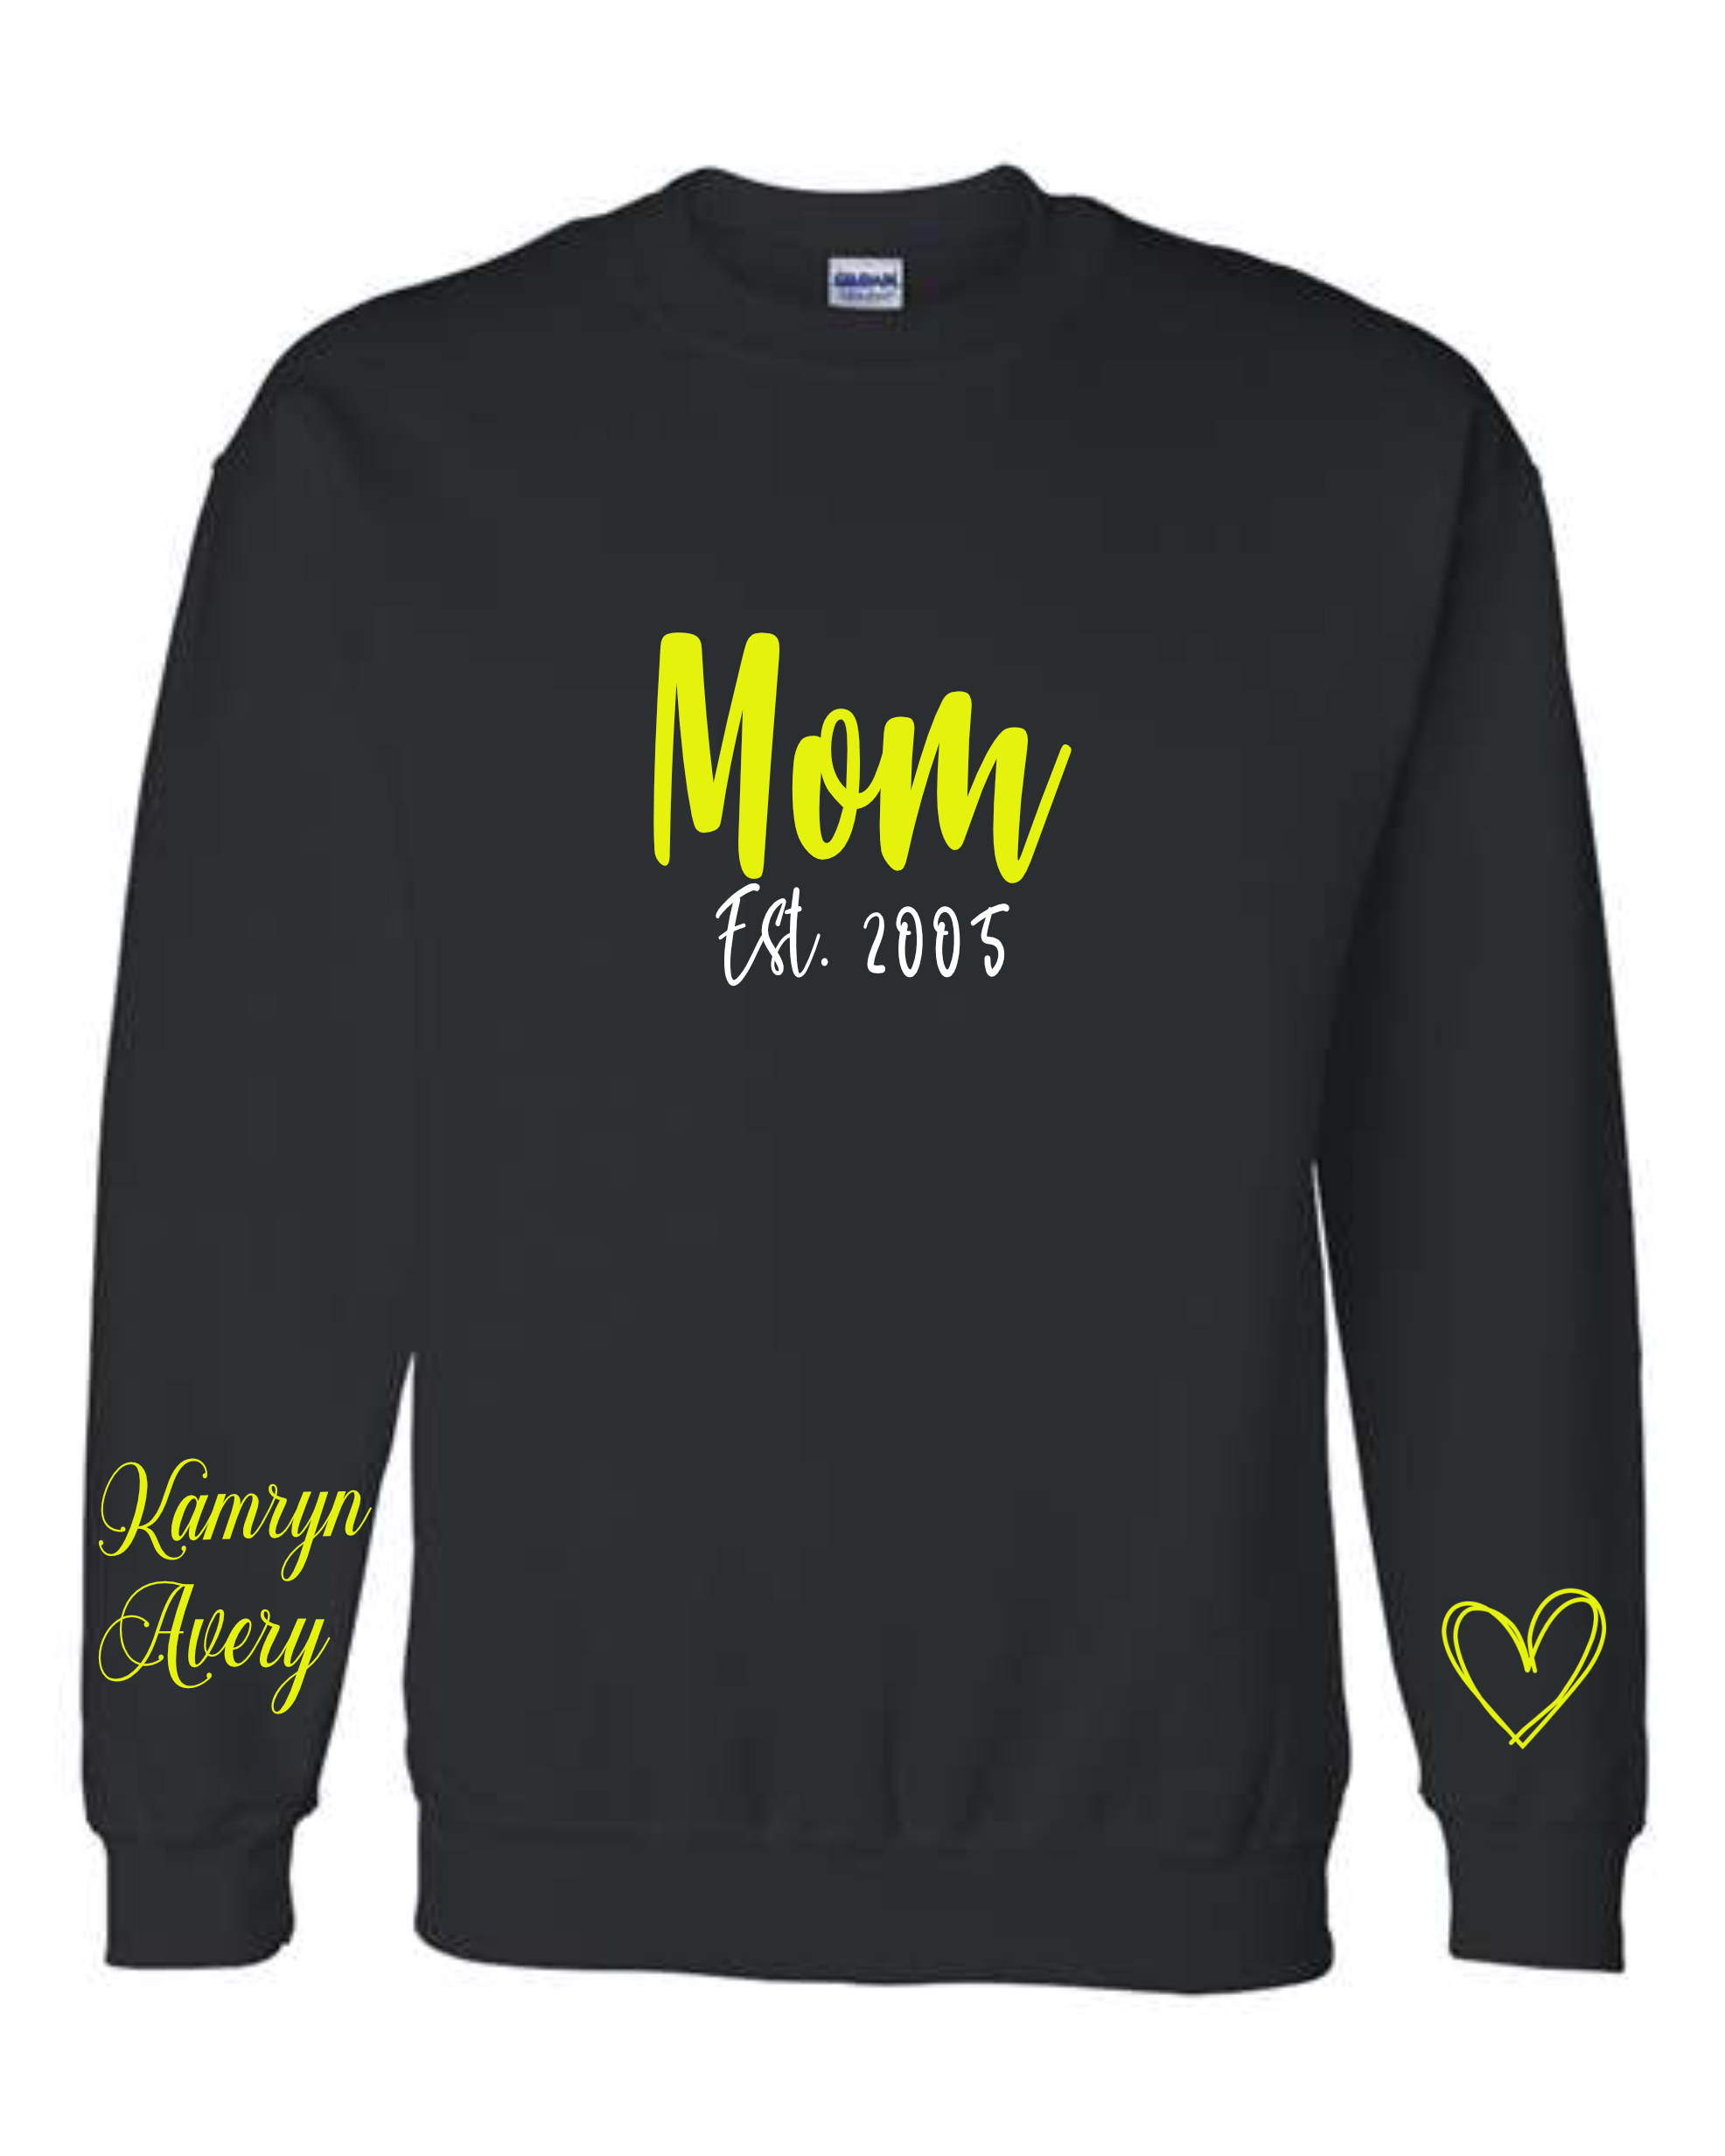 “MOM” sweater